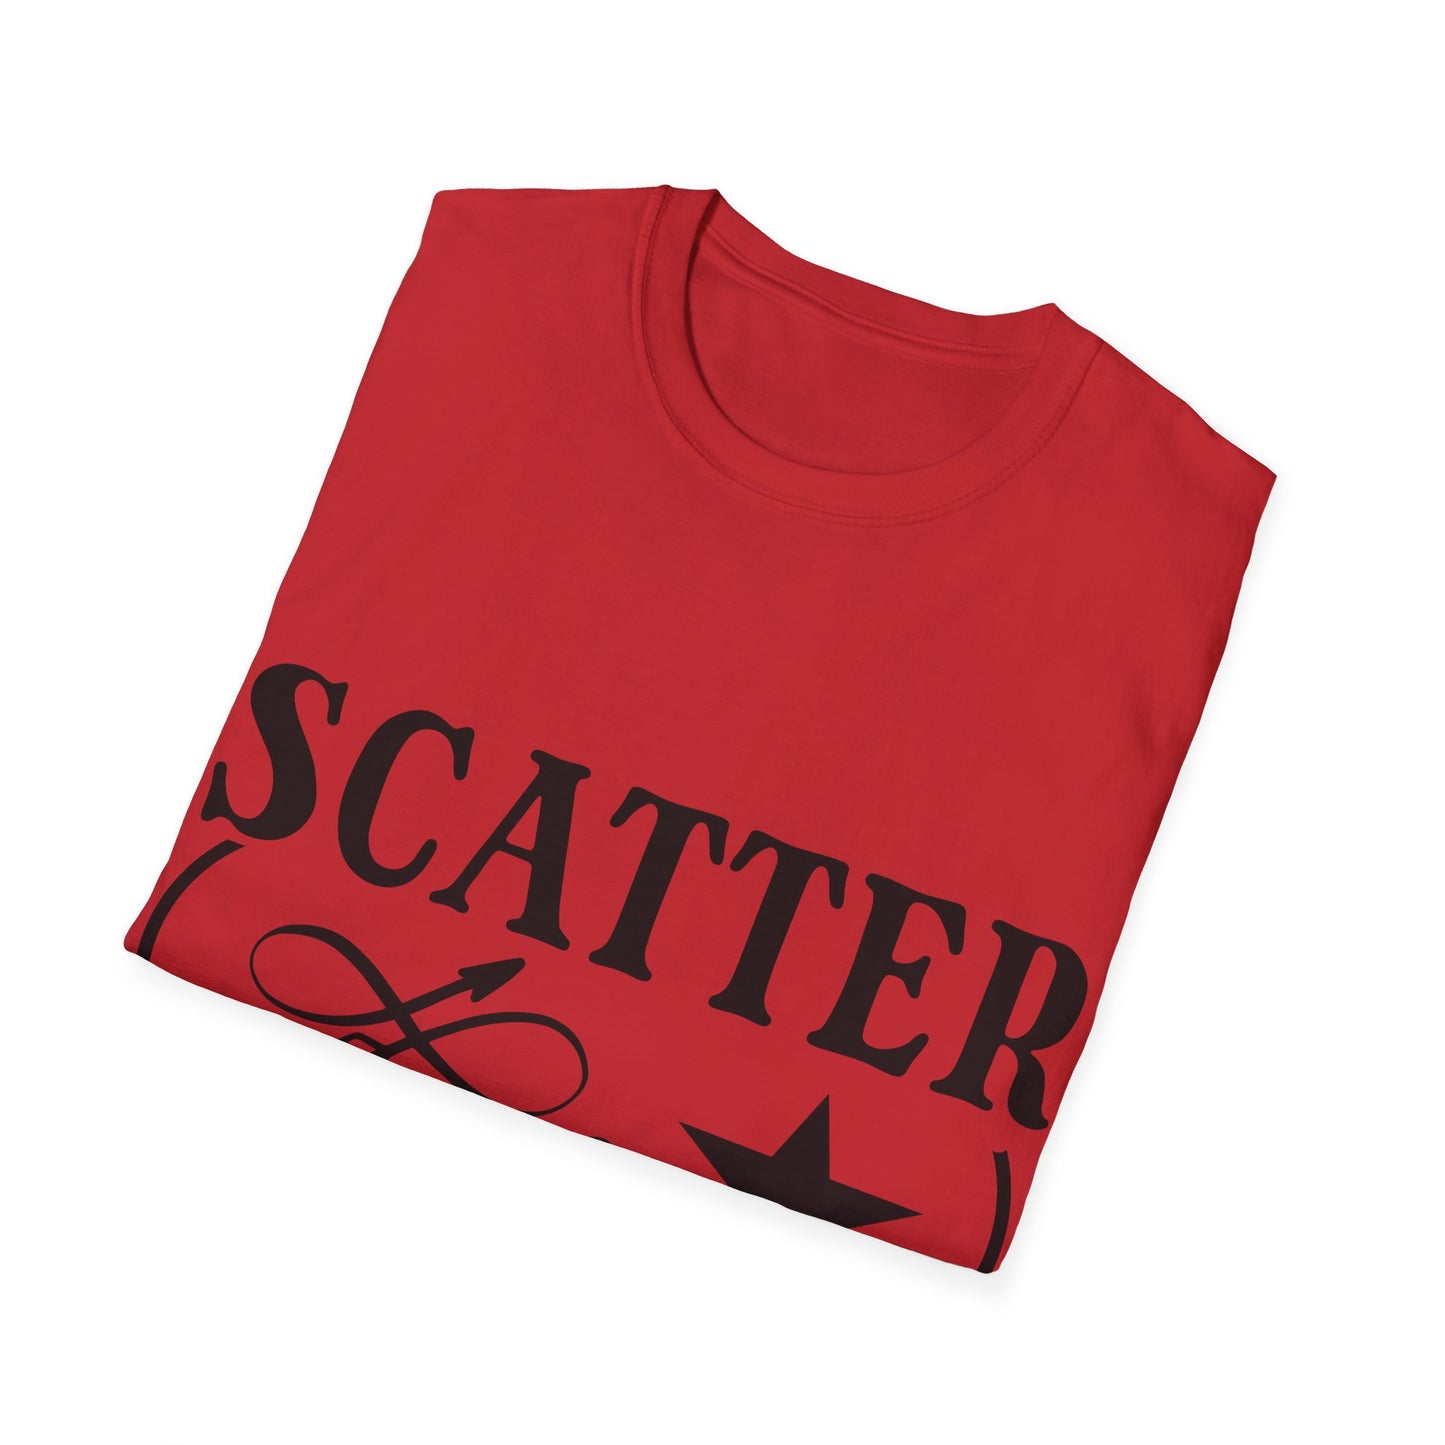 Scatter Kindness Triple Viking T-Shirt